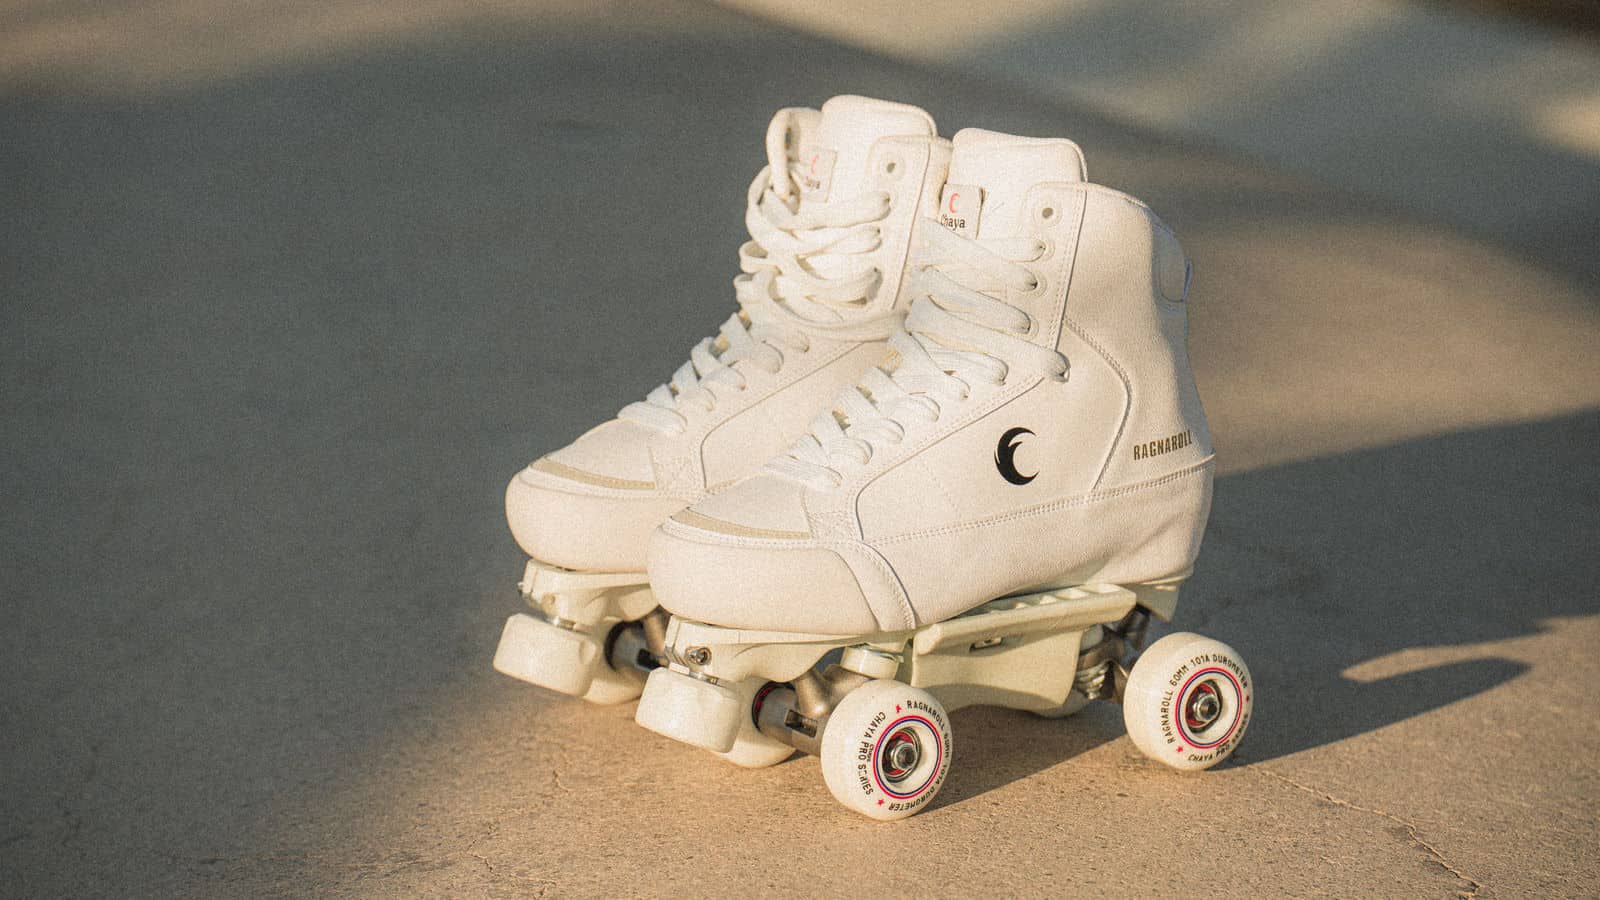 CHAYA Ragnaroll Pro White Park Roller Skates